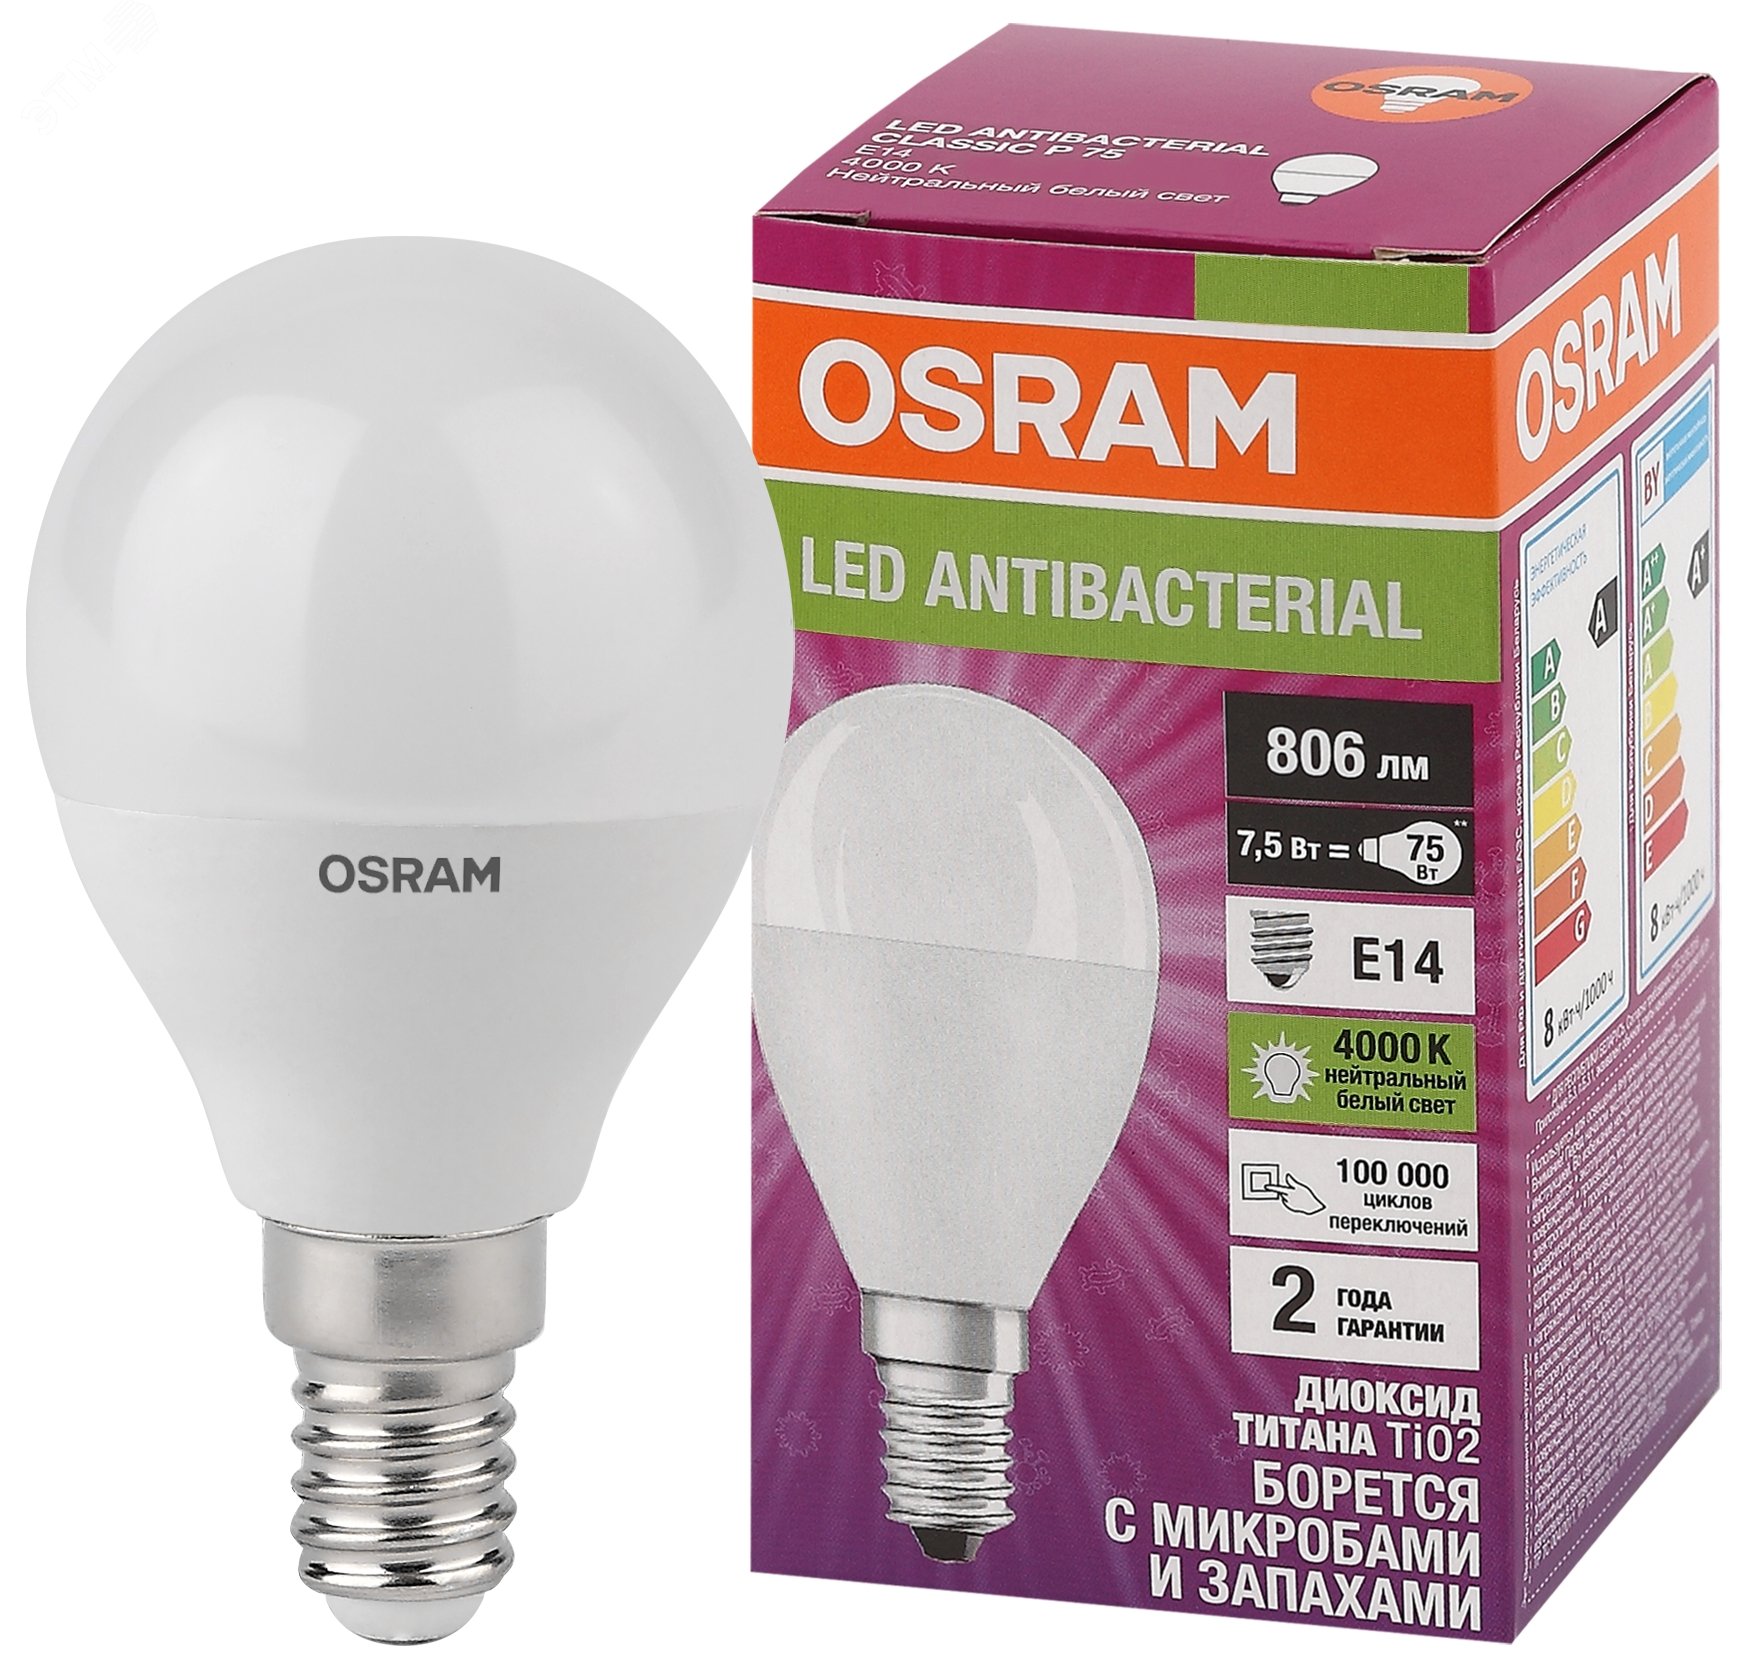 Лампа светодиодная LED Antibacterial Шарообразная 7,5Вт (замена 75 Вт), 806Лм, 4000 К, цоколь E14 OSRAM 4058075561670 LEDVANCE